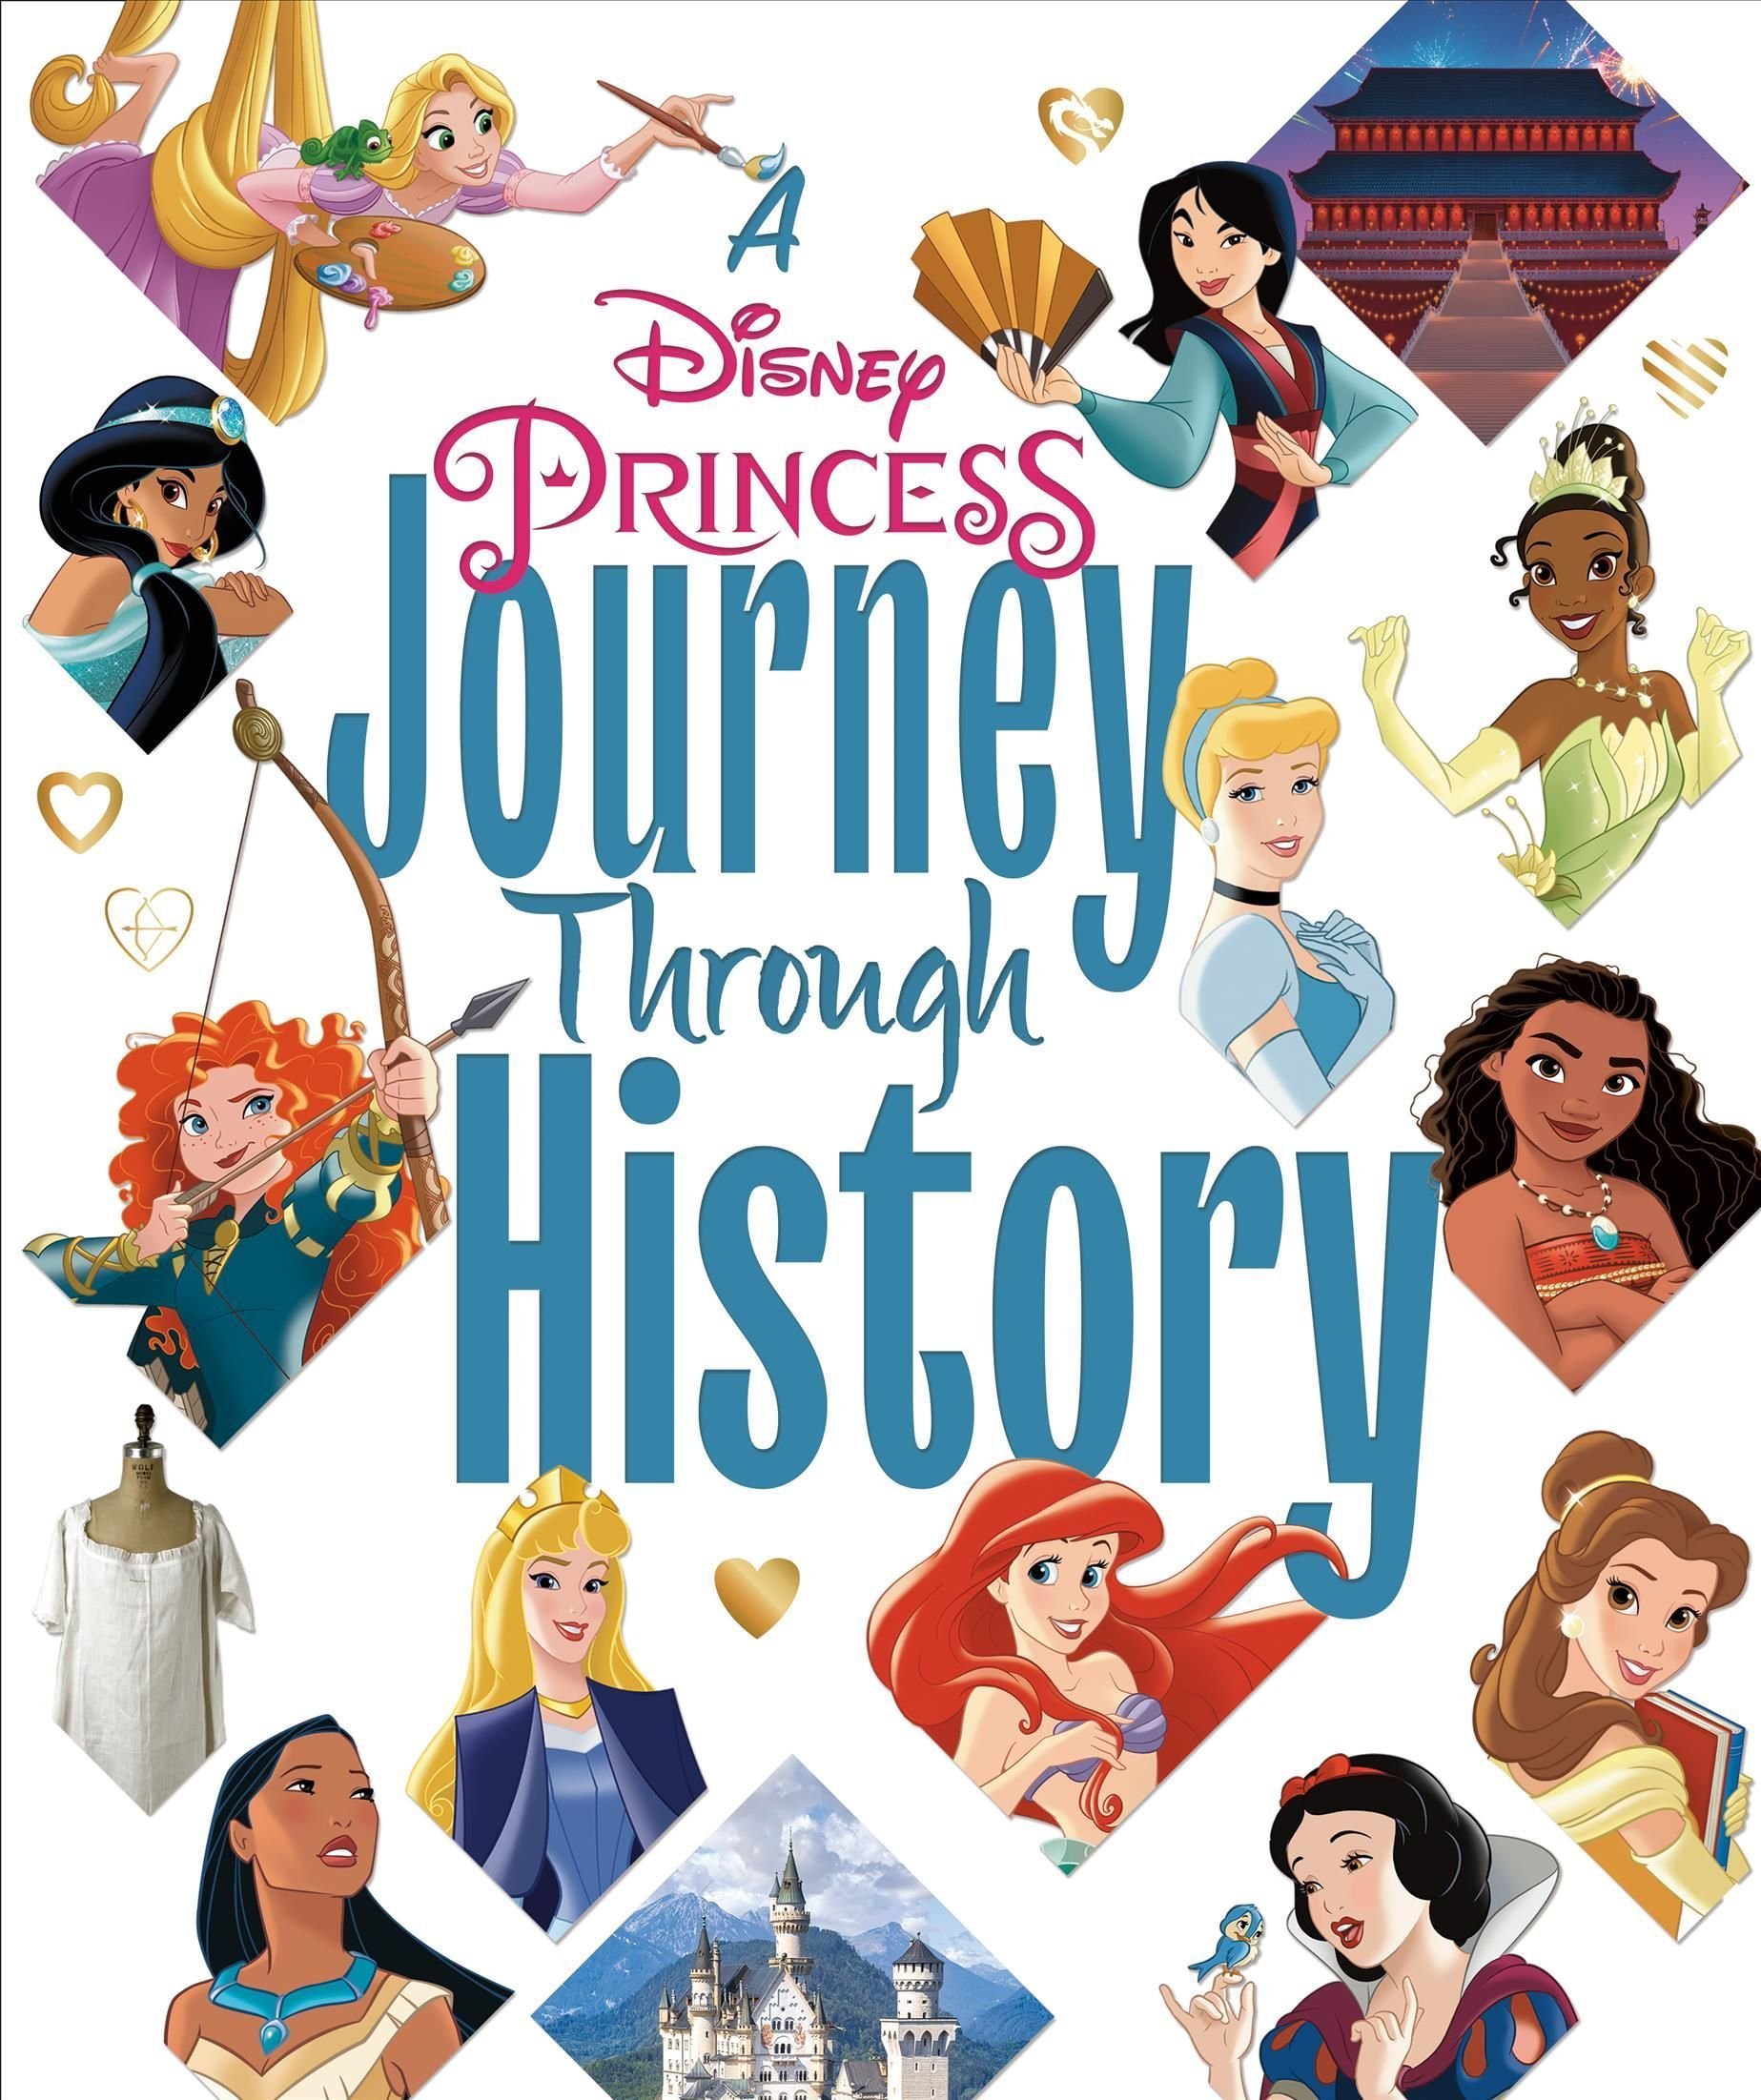 https://wordery.com/jackets/509c48e1/disney-princess-journey-through-history-disney-princess-courtney-carbone-9780736439398.jpg